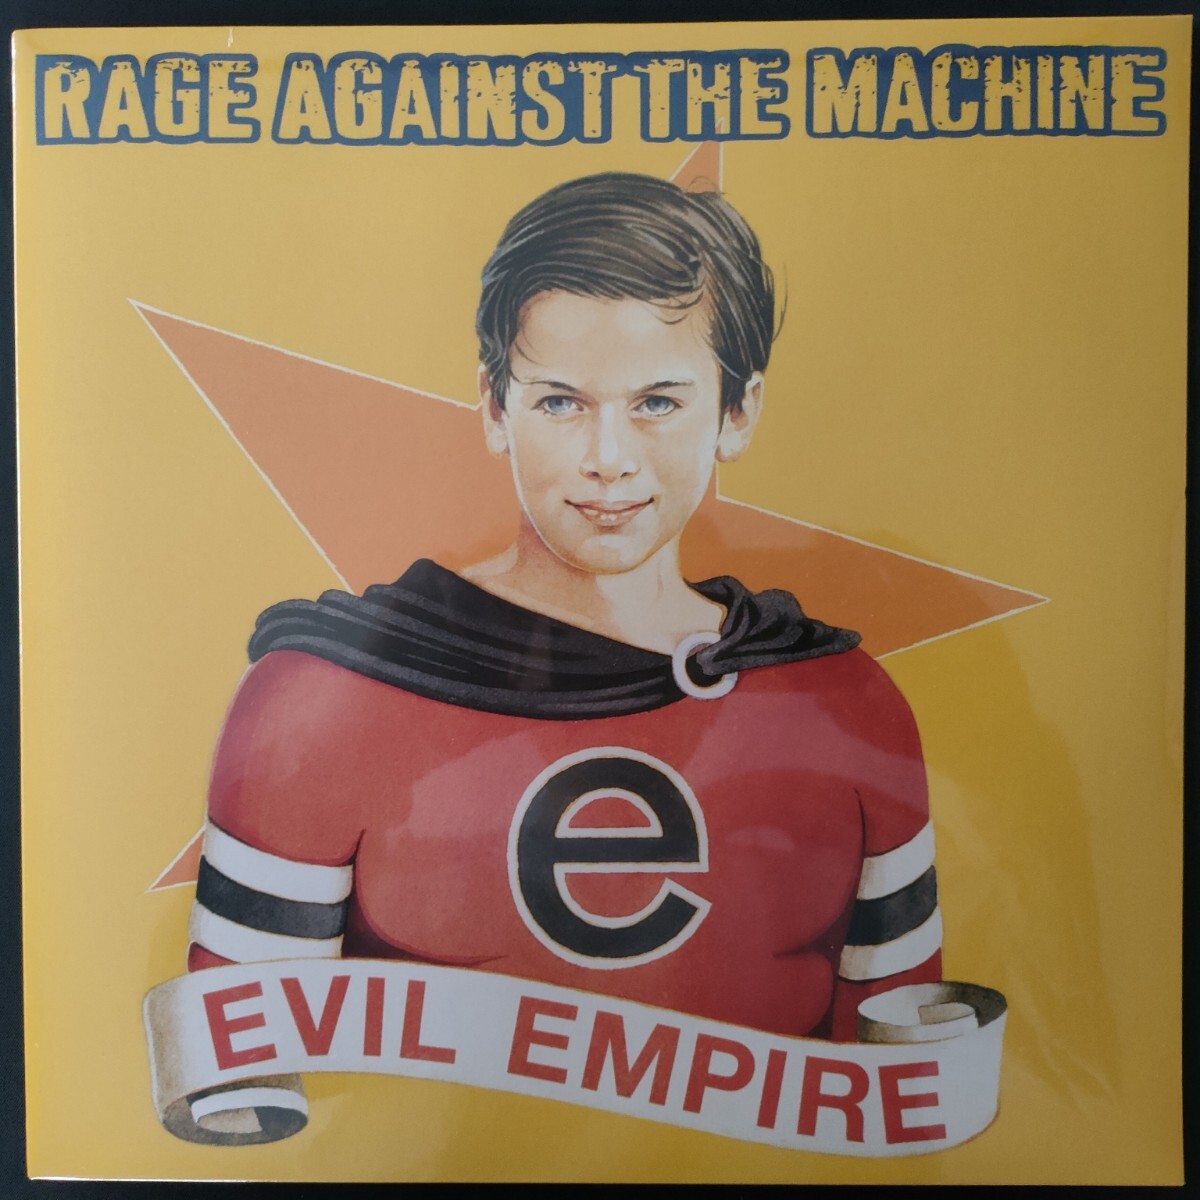  new goods unopened LP record Rage Against The Machine Ray ji*age instrument * The * machine Evil Empiree vi ru empire Germany record 